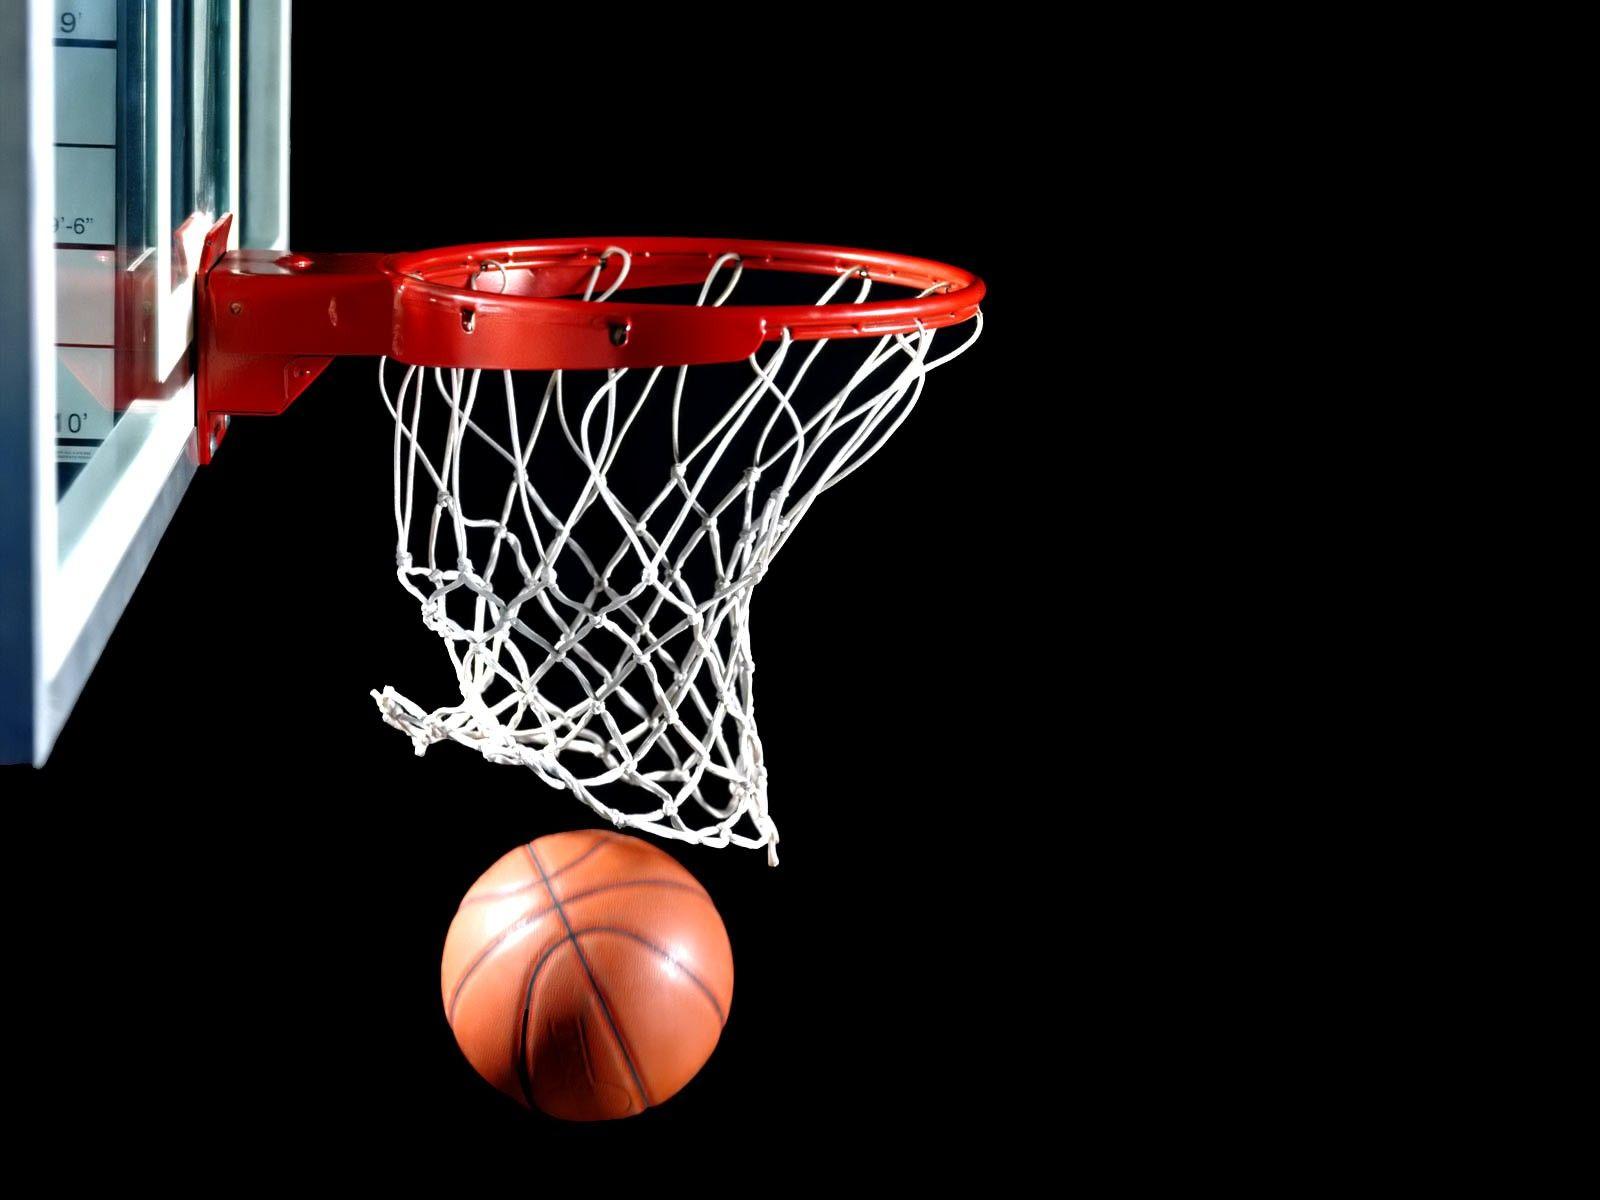 Shooting Hoops. Basketball wallpaper, Ncaa basketball, Cool basketball wallpaper